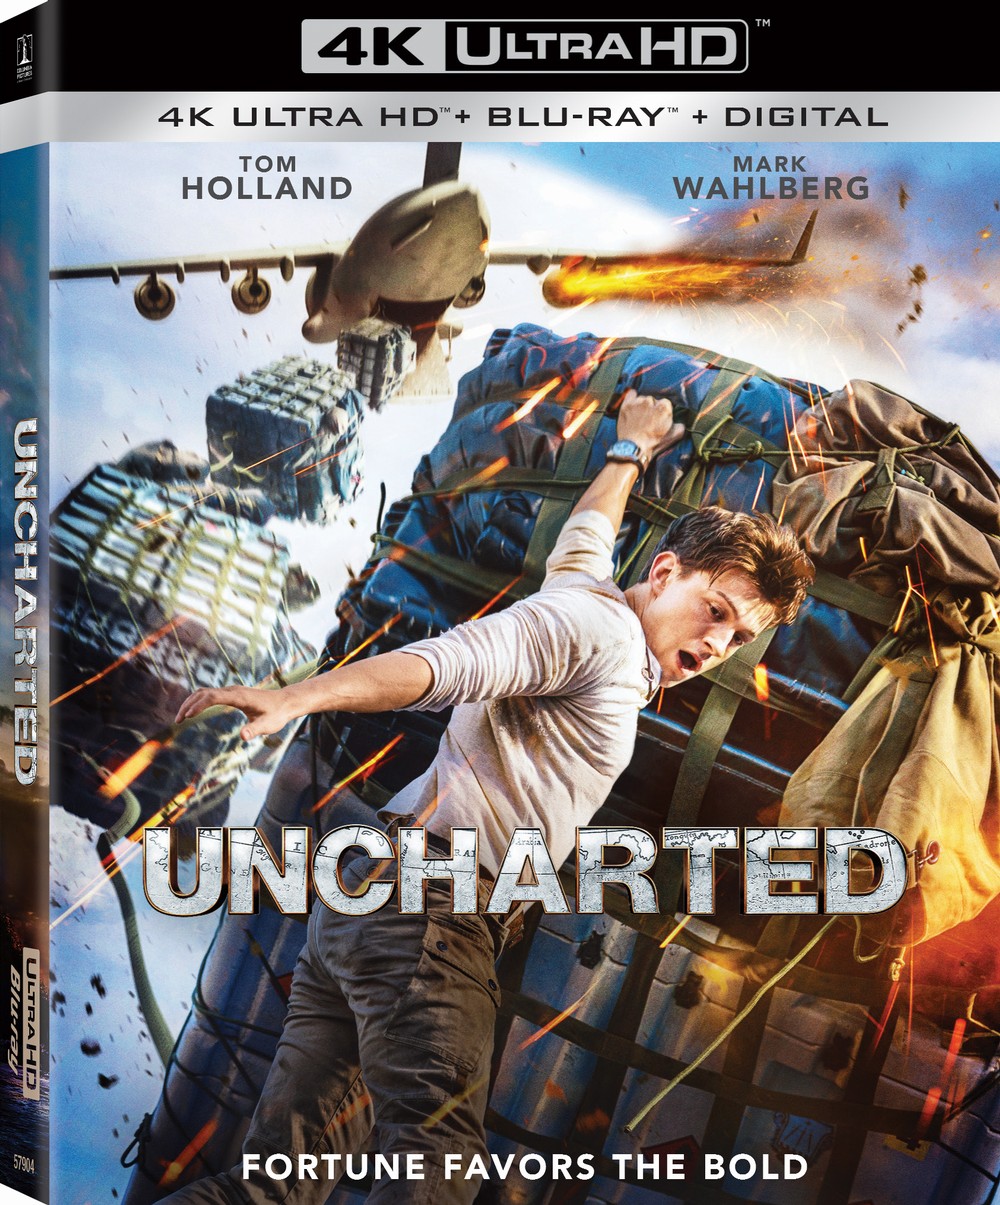  Uncharted [DVD] : Tom Holland, Mark Wahlberg, Sophia